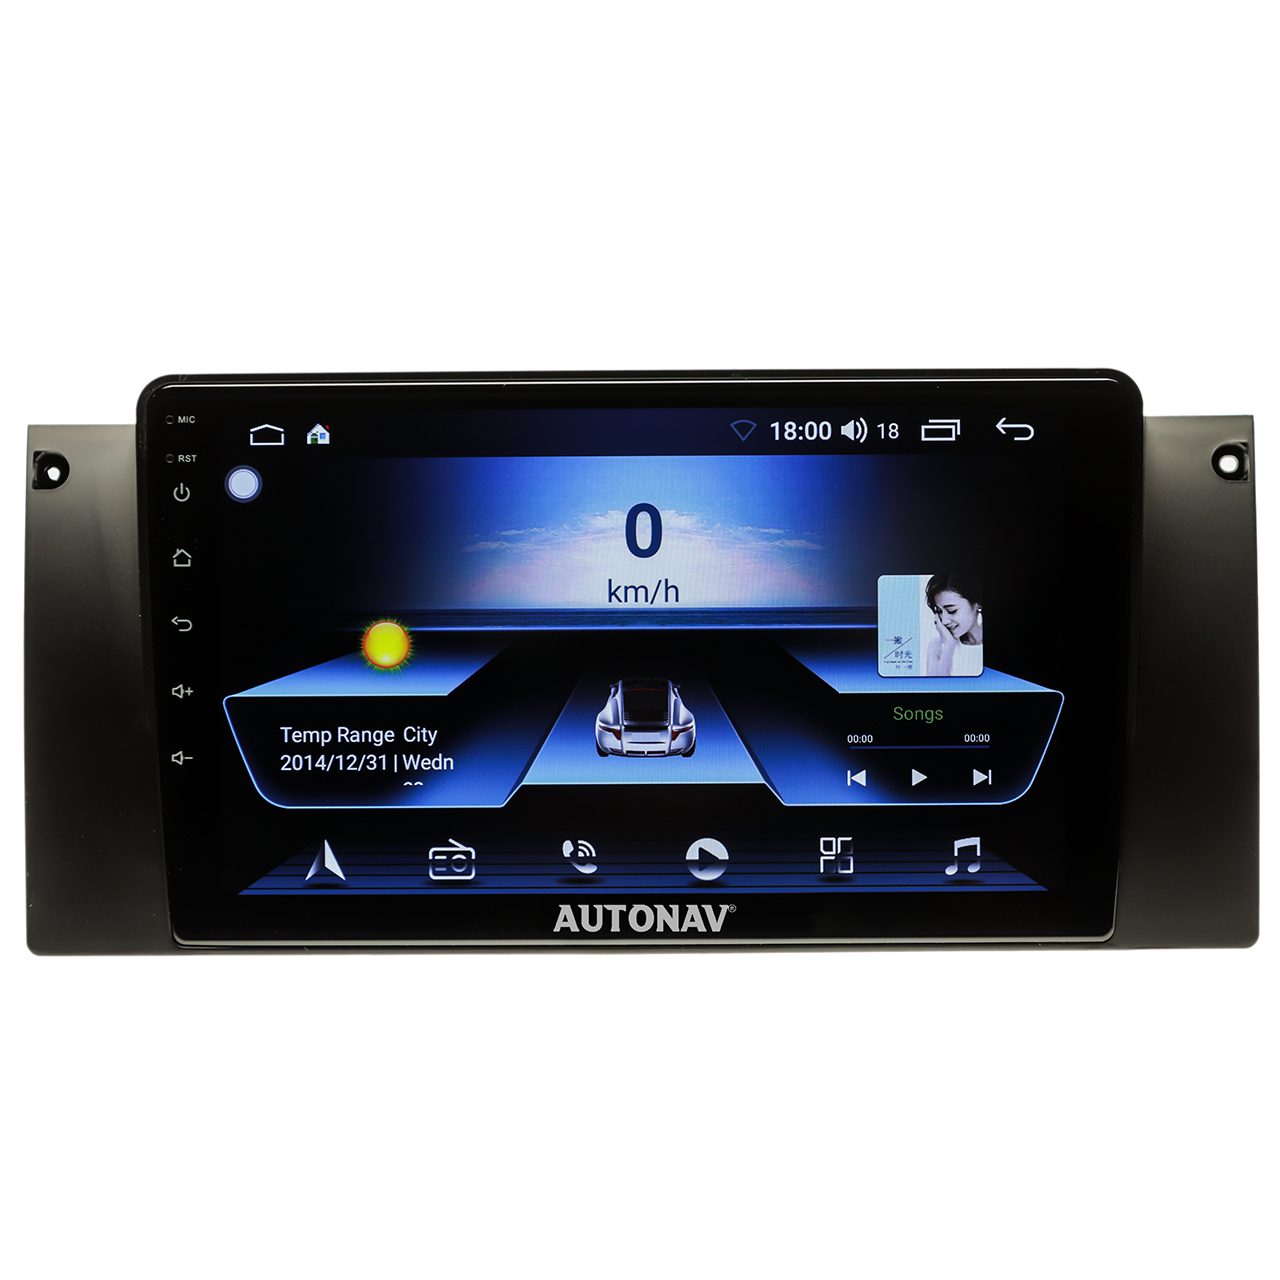 Navigatie AUTONAV Android GPS Dedicata BMW E39, Model Classic, Memorie 128GB Stocare, 6GB DDR3 RAM, Display 9